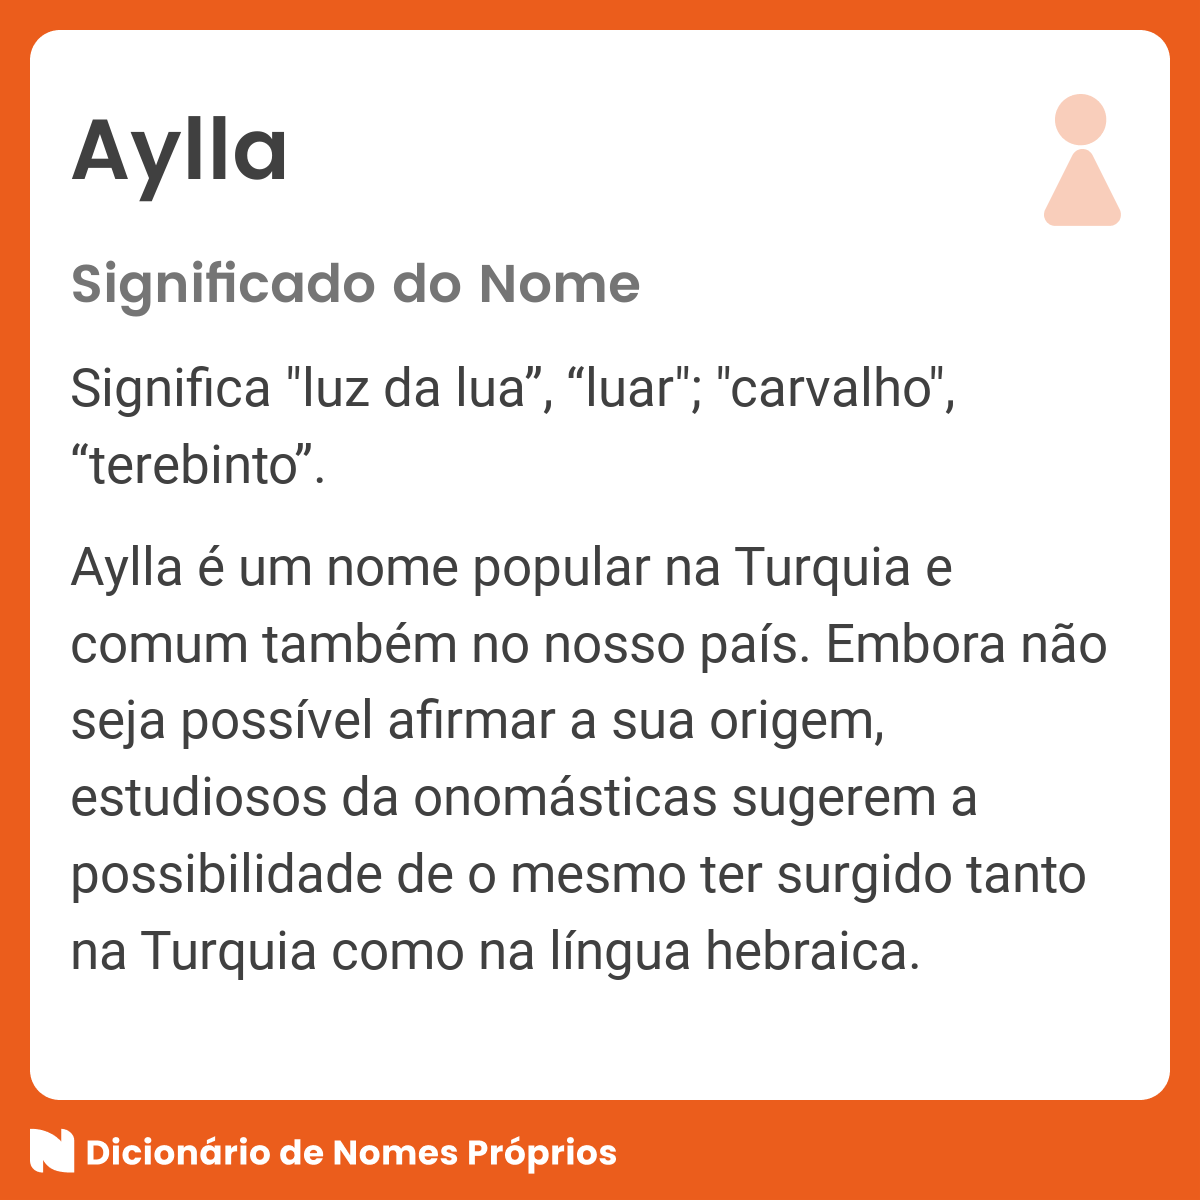 Descobrindo o Significado do Nome Aylla